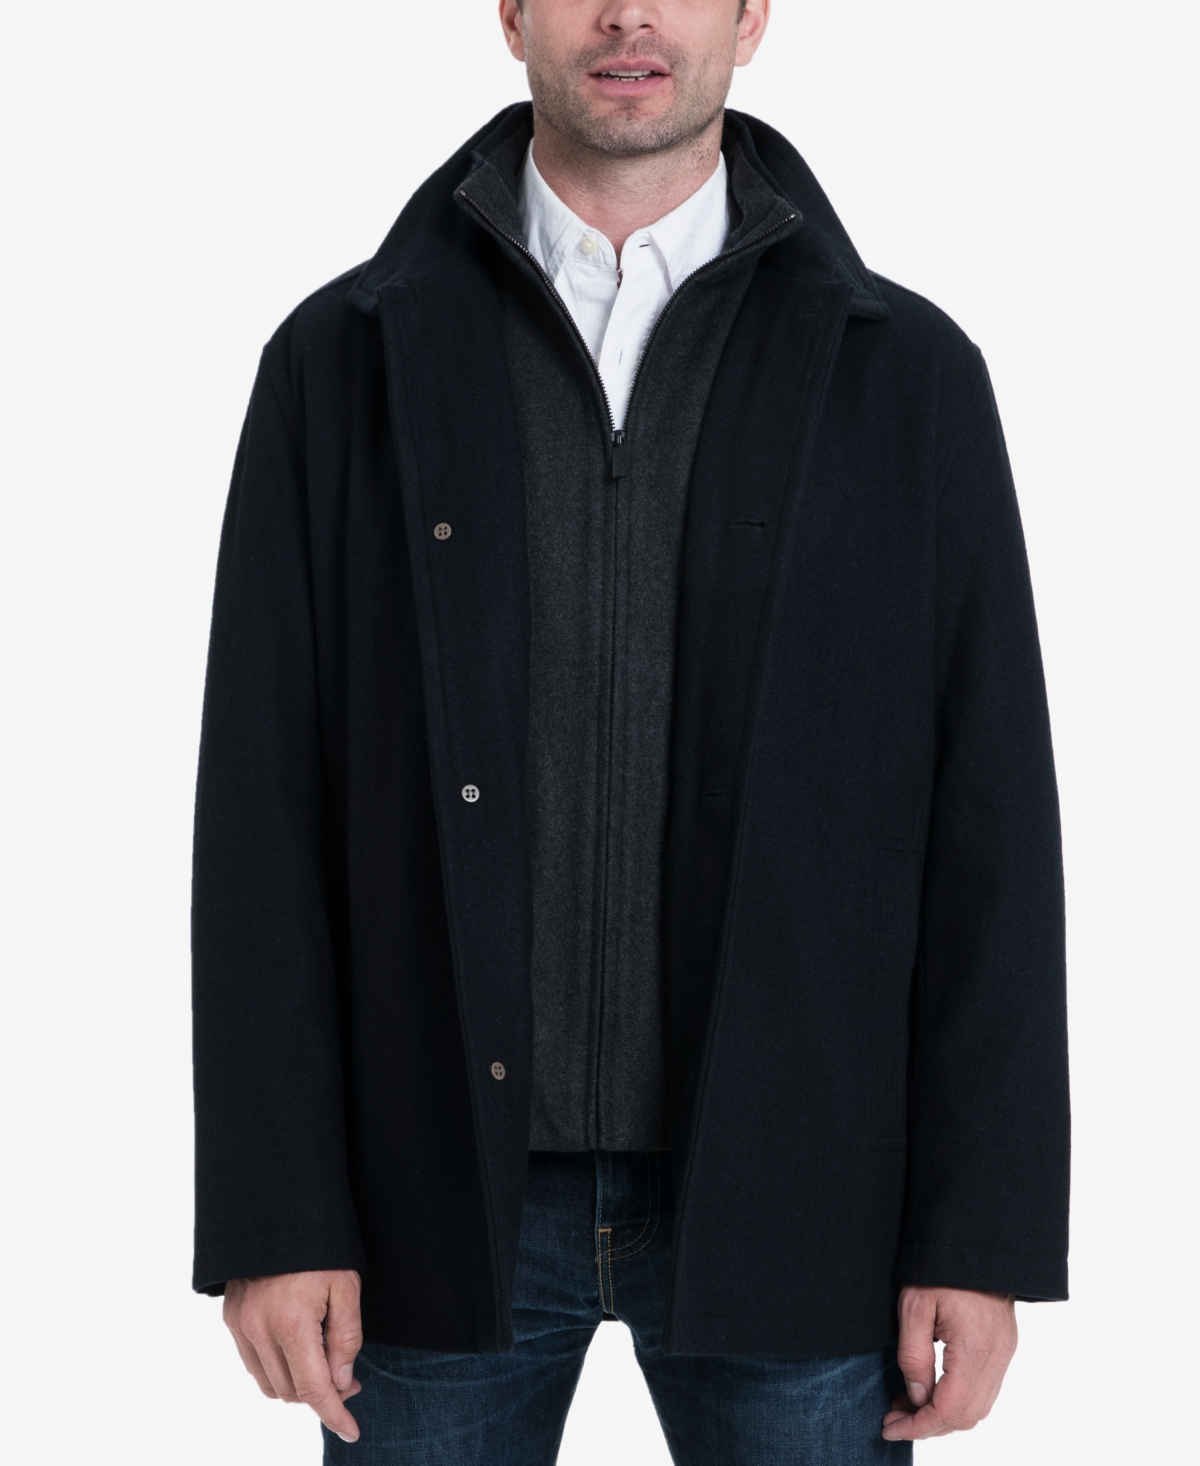 Men's Wool-Blend Layered Car Coat, Created for Macy's - Mocha